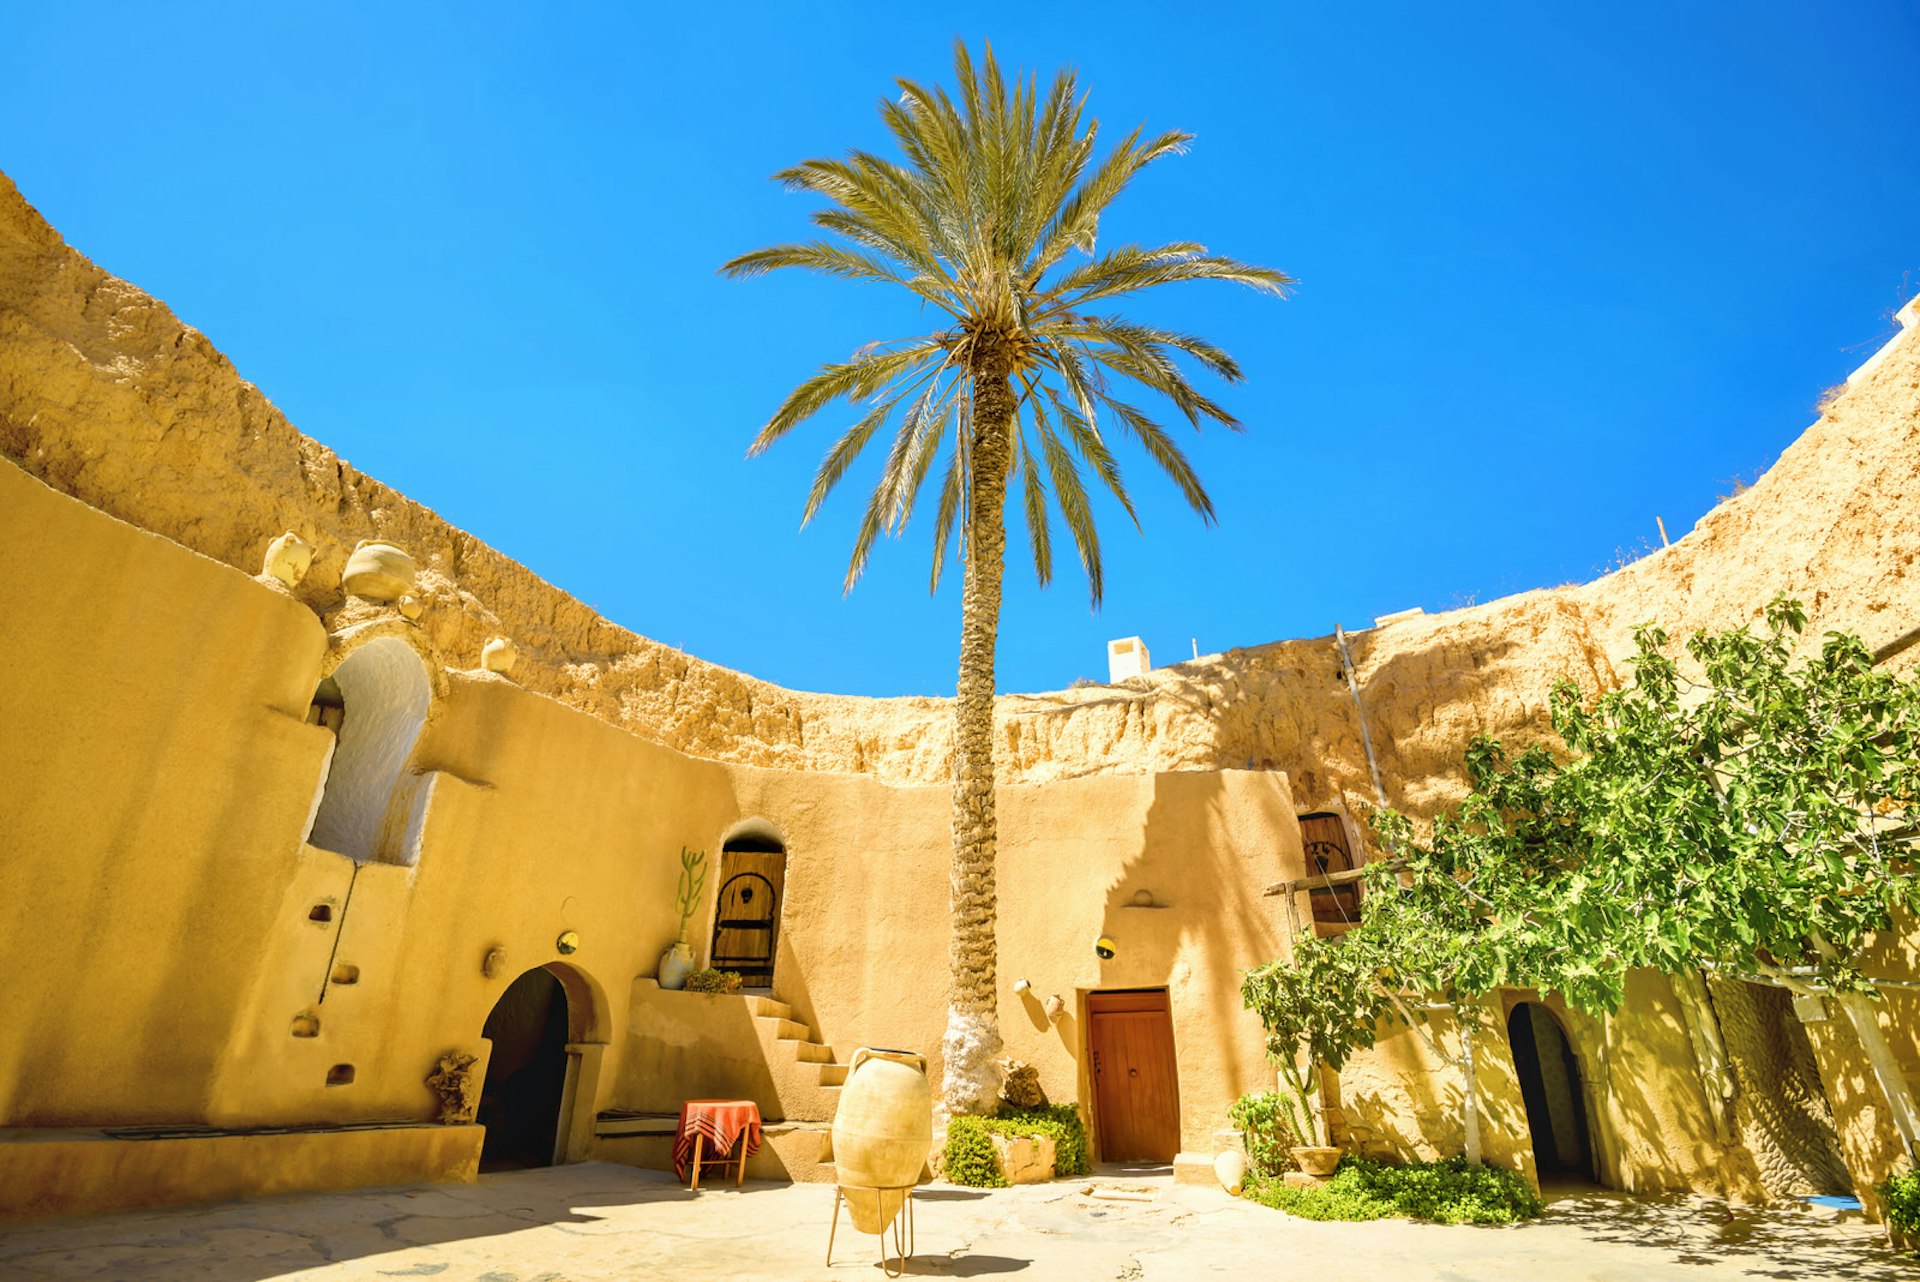 Courtyard of Berber underground dwellings. Matmata, Tunisia